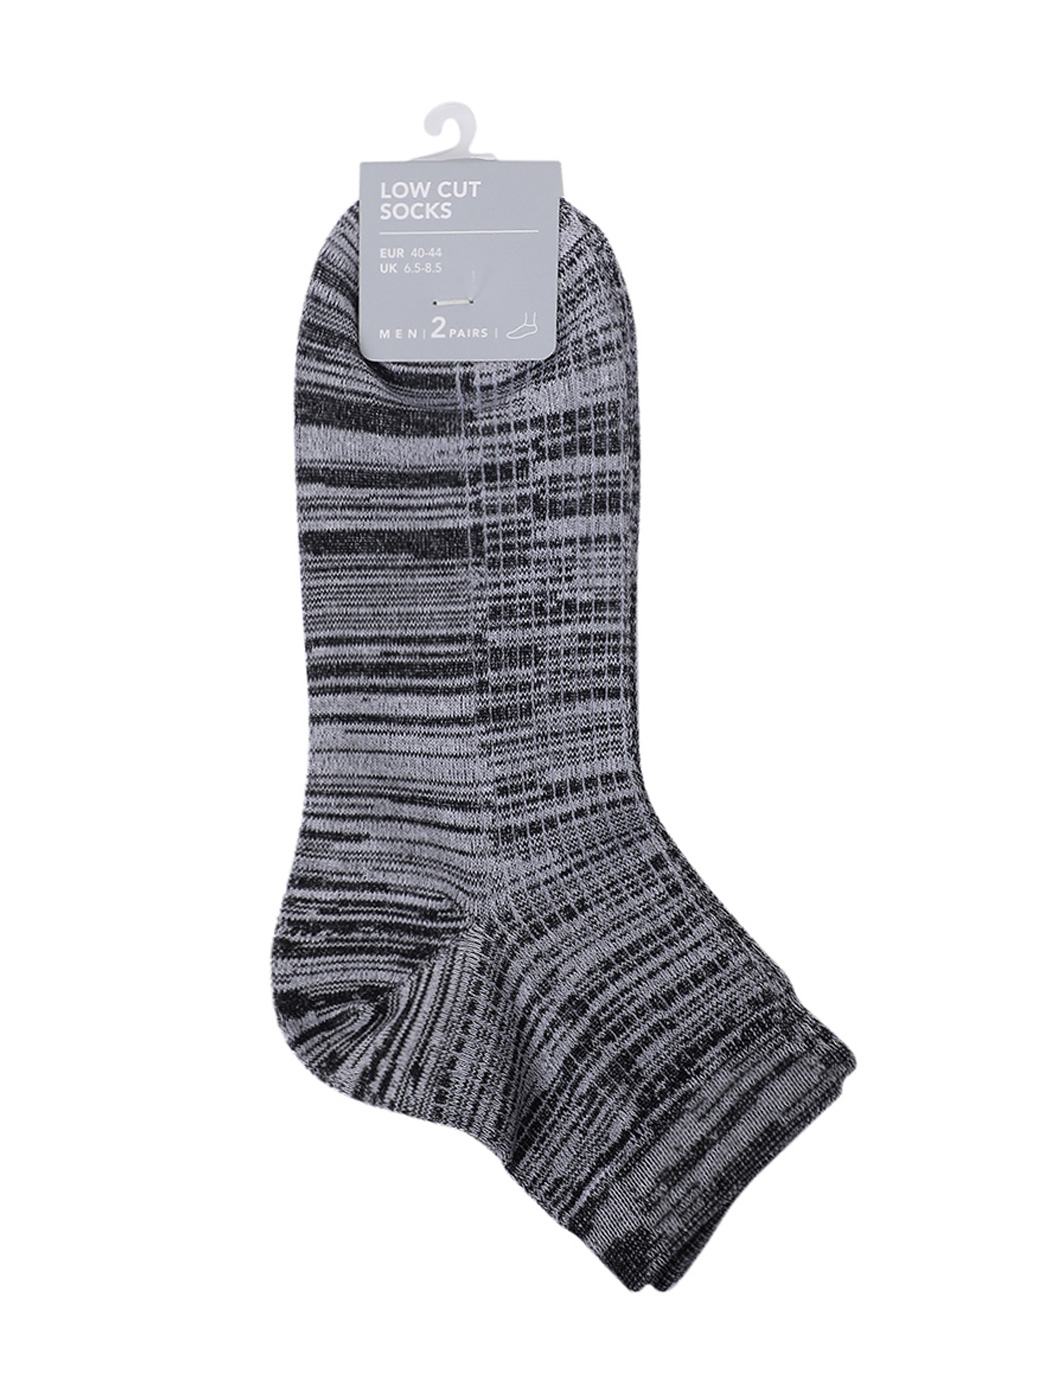 Miniso Men's Low Cut Socks 2 Pairs(Ashen)